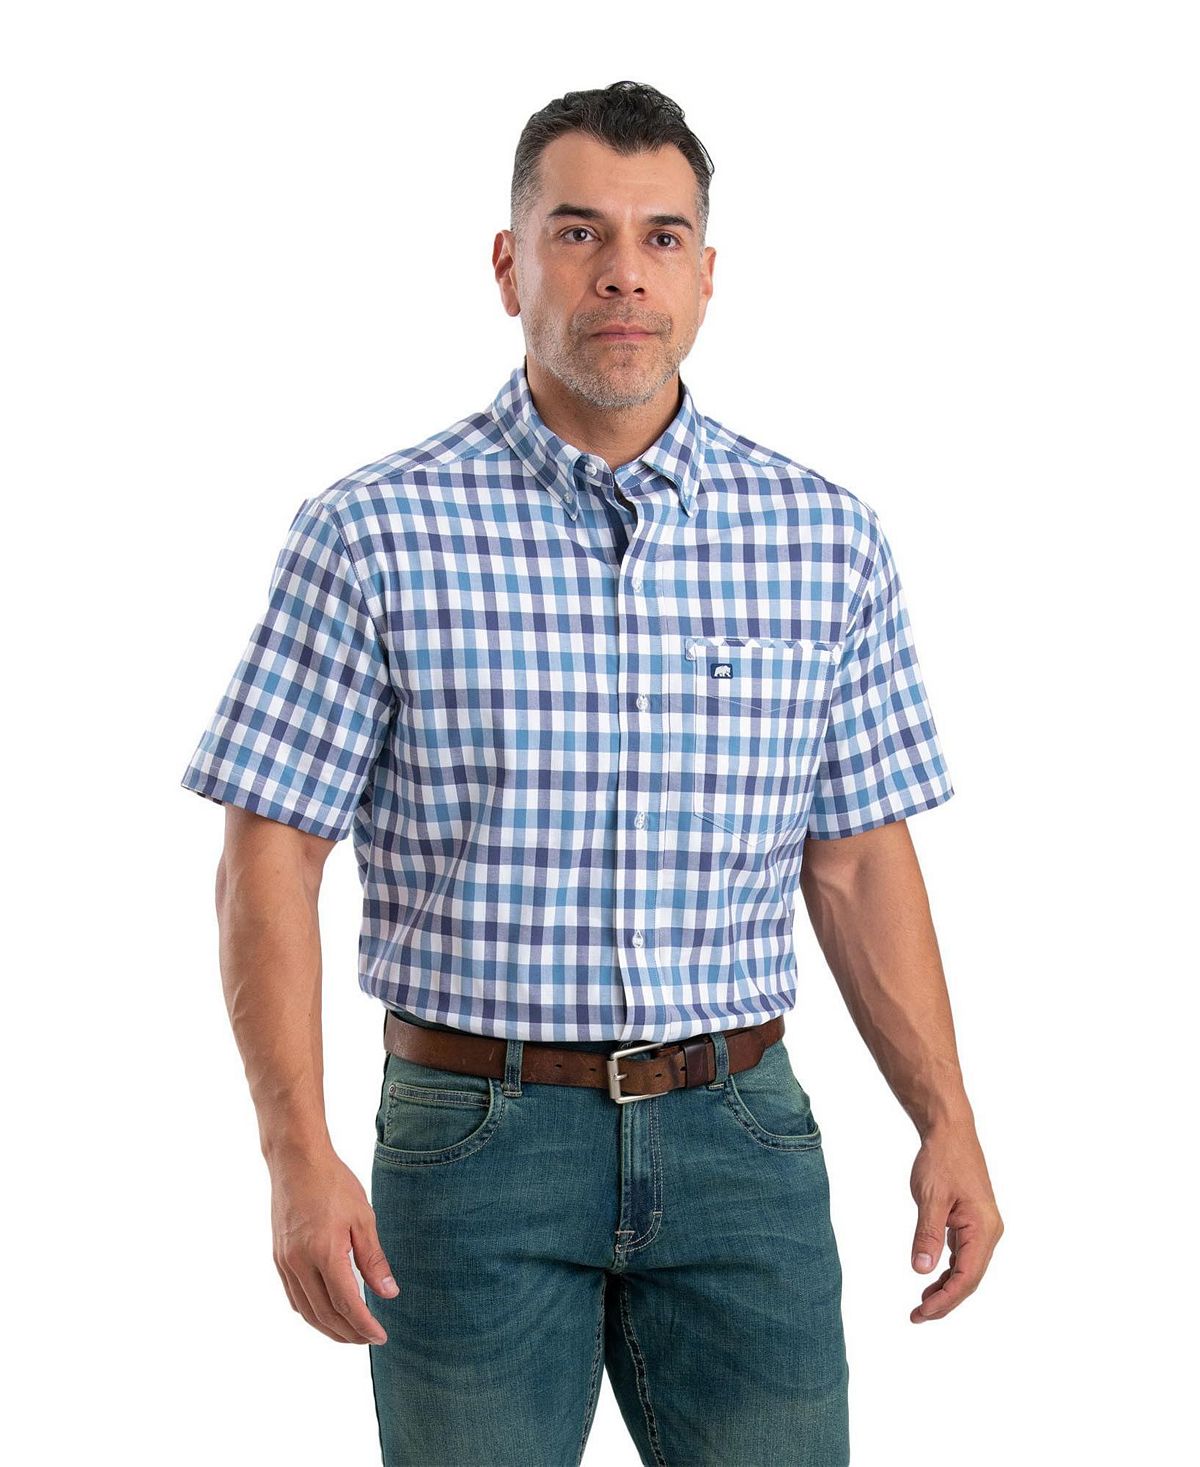 Мужская рубашка на пуговицах с короткими рукавами Big & Tall Foreman Flex Berne george foreman 25800 56